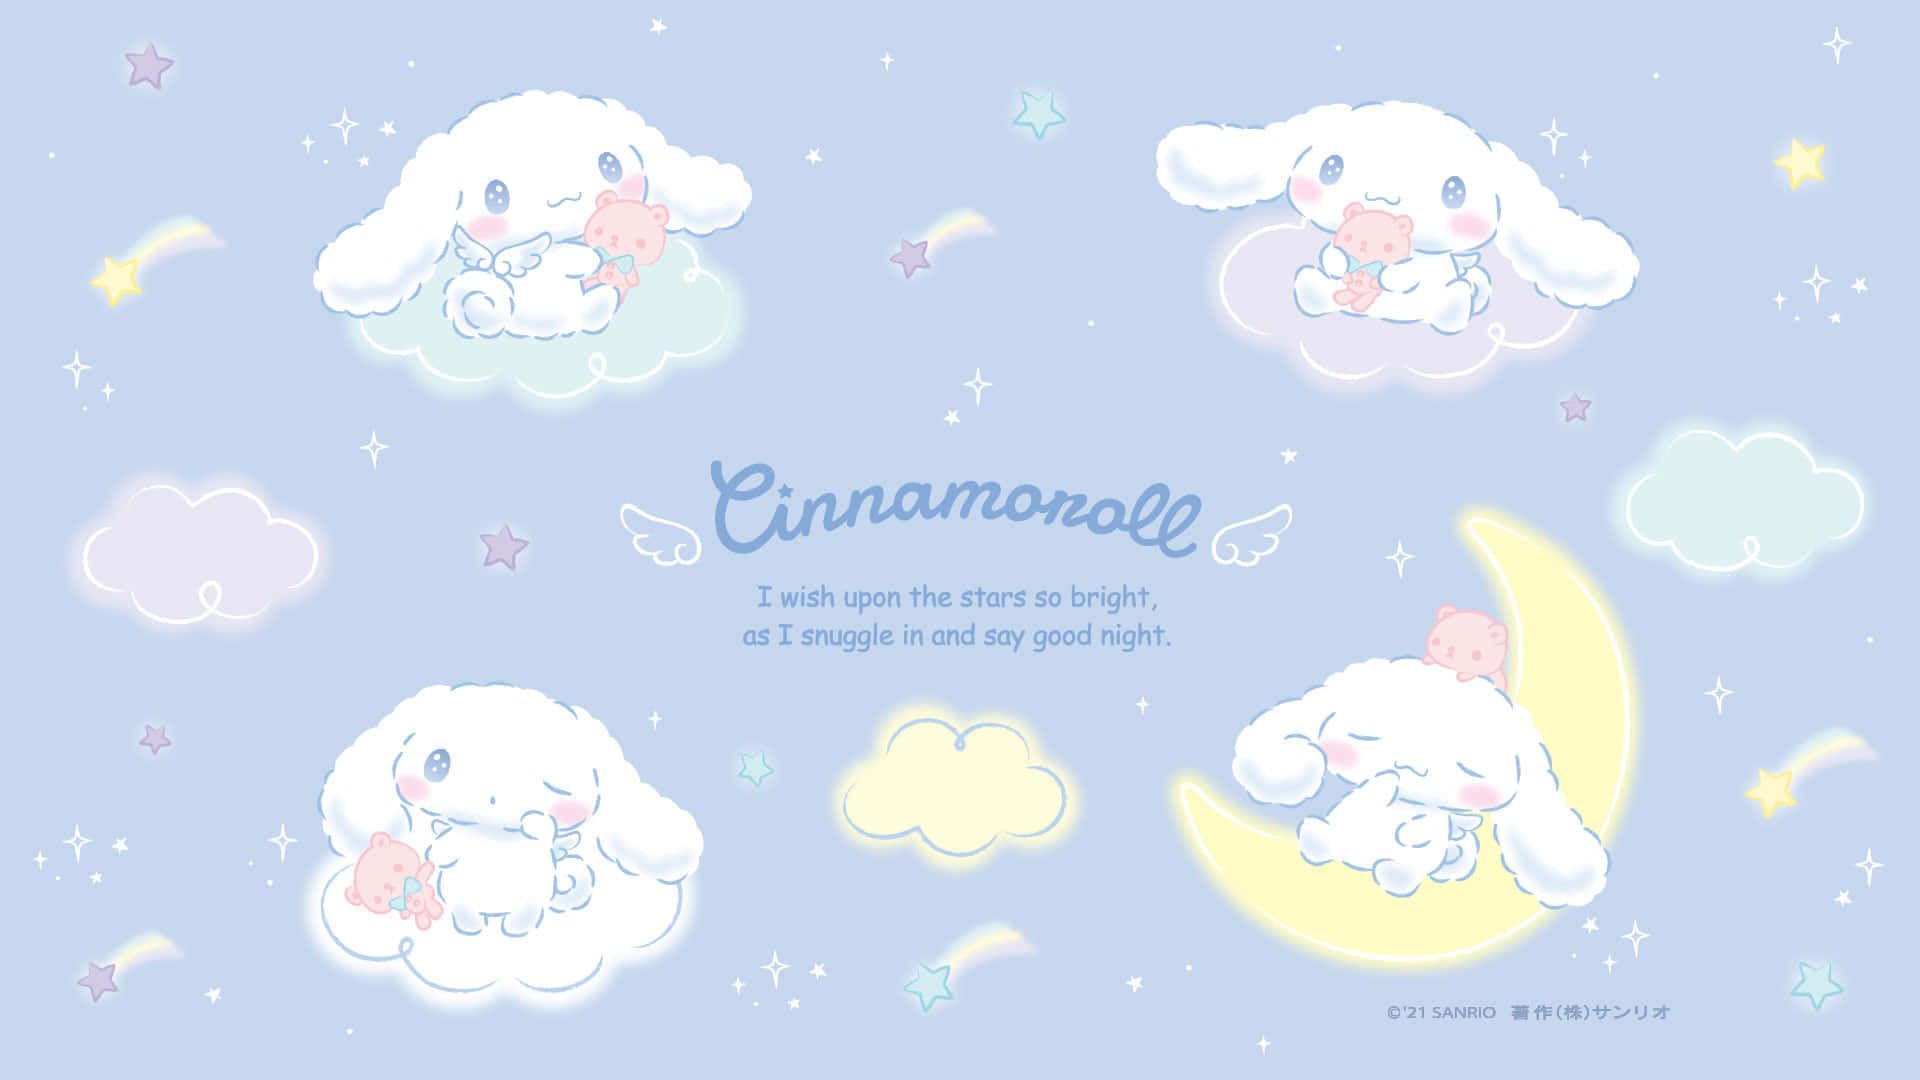 A cute cartoon of two bunnies on the moon - Cinnamoroll